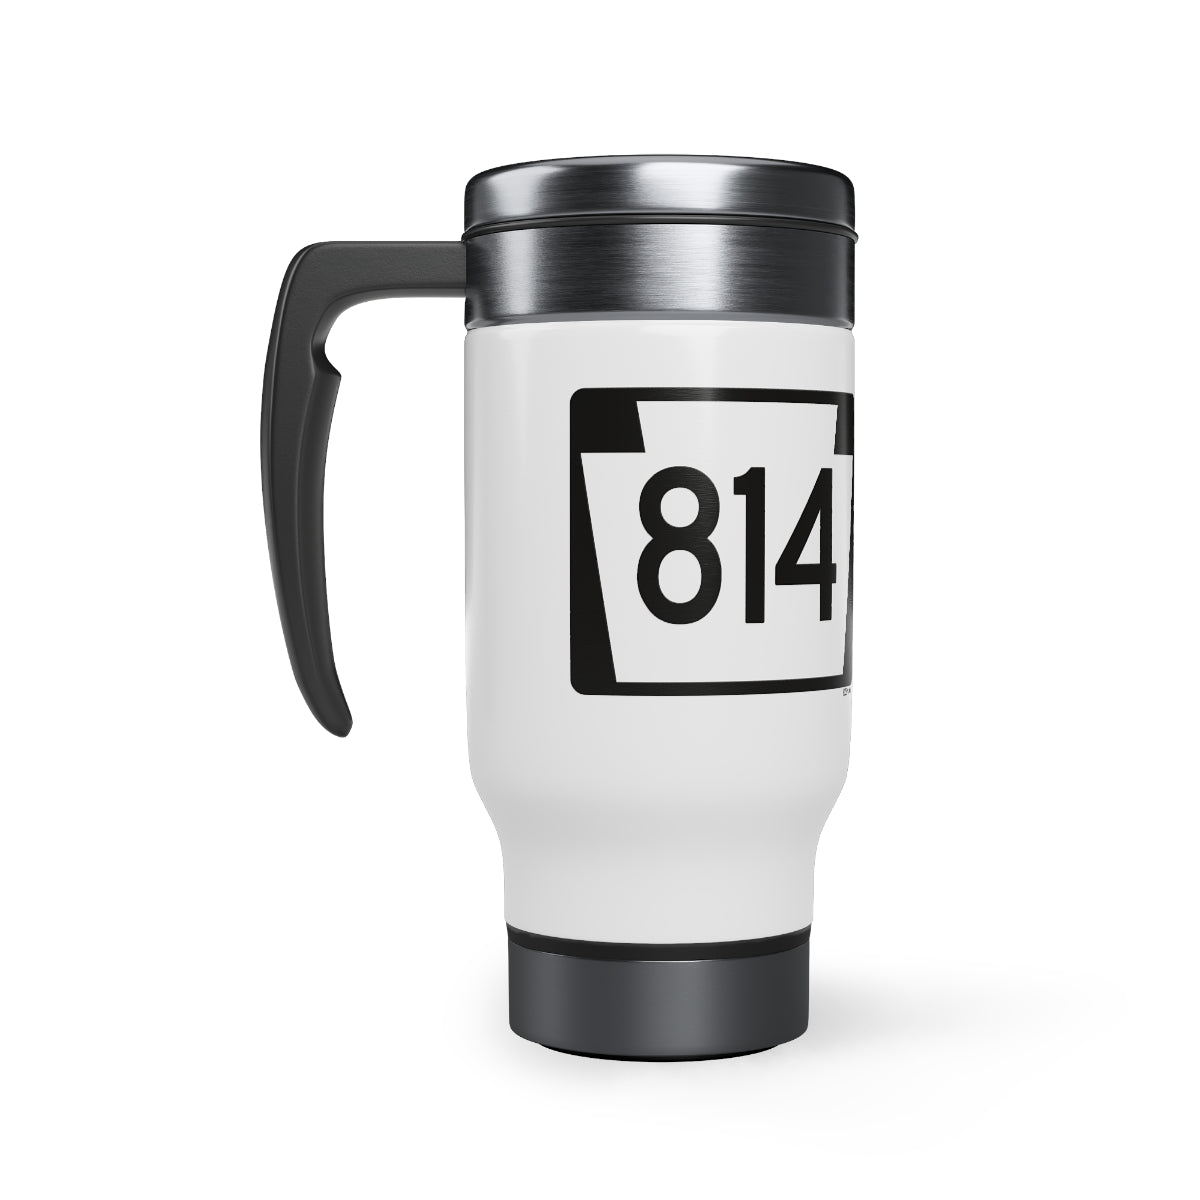 ROAD SIGN 814 - Stainless Steel Travel Mug with Handle, 14oz - Yinzylvania